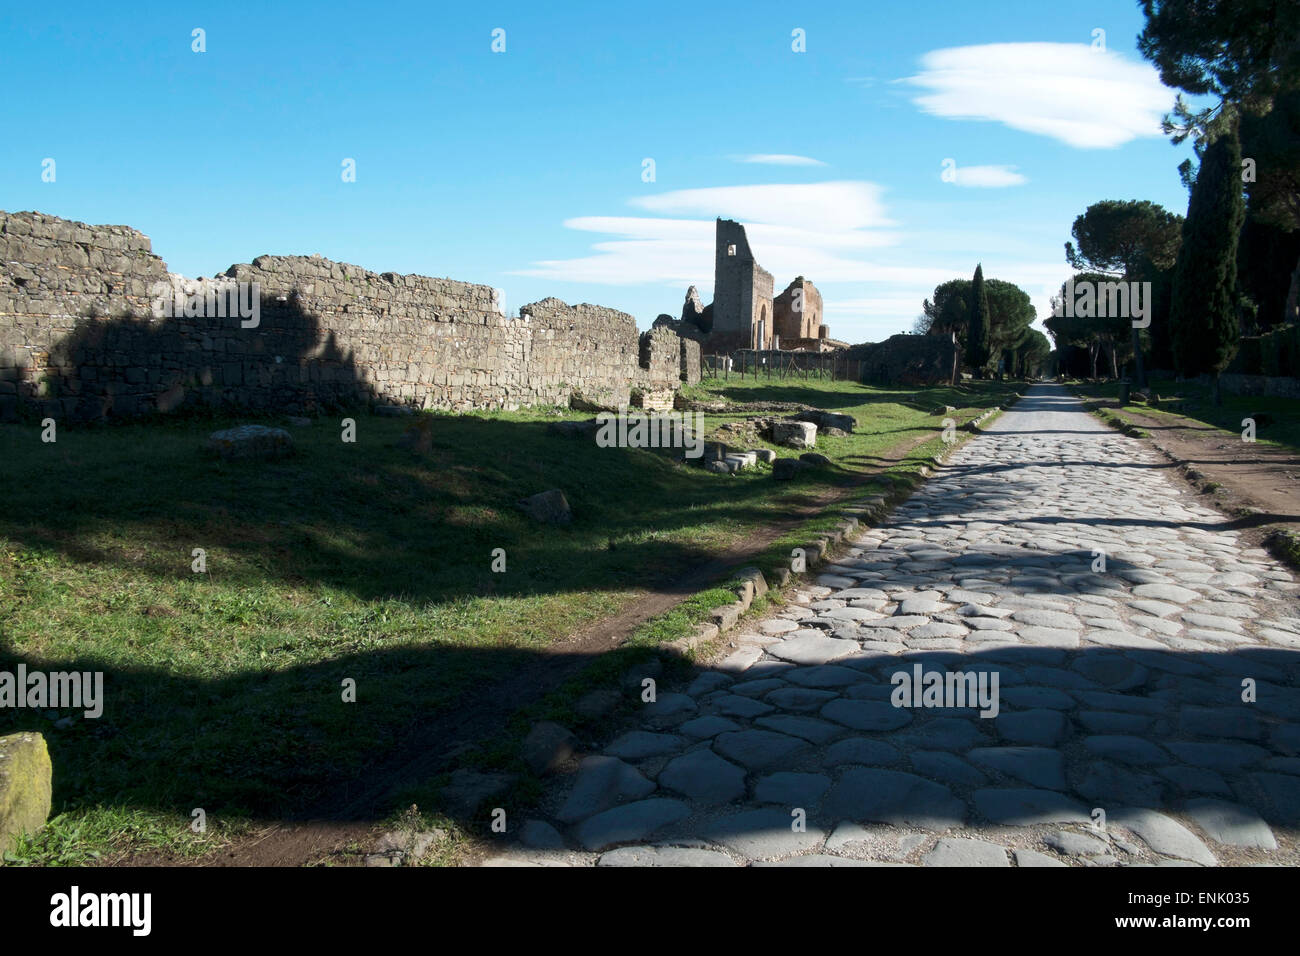 La reina de las carreteras de la antigua calzada romana era la vía Appia conectando Roma al sur de Italia, Roma, Lazio, Italia Foto de stock